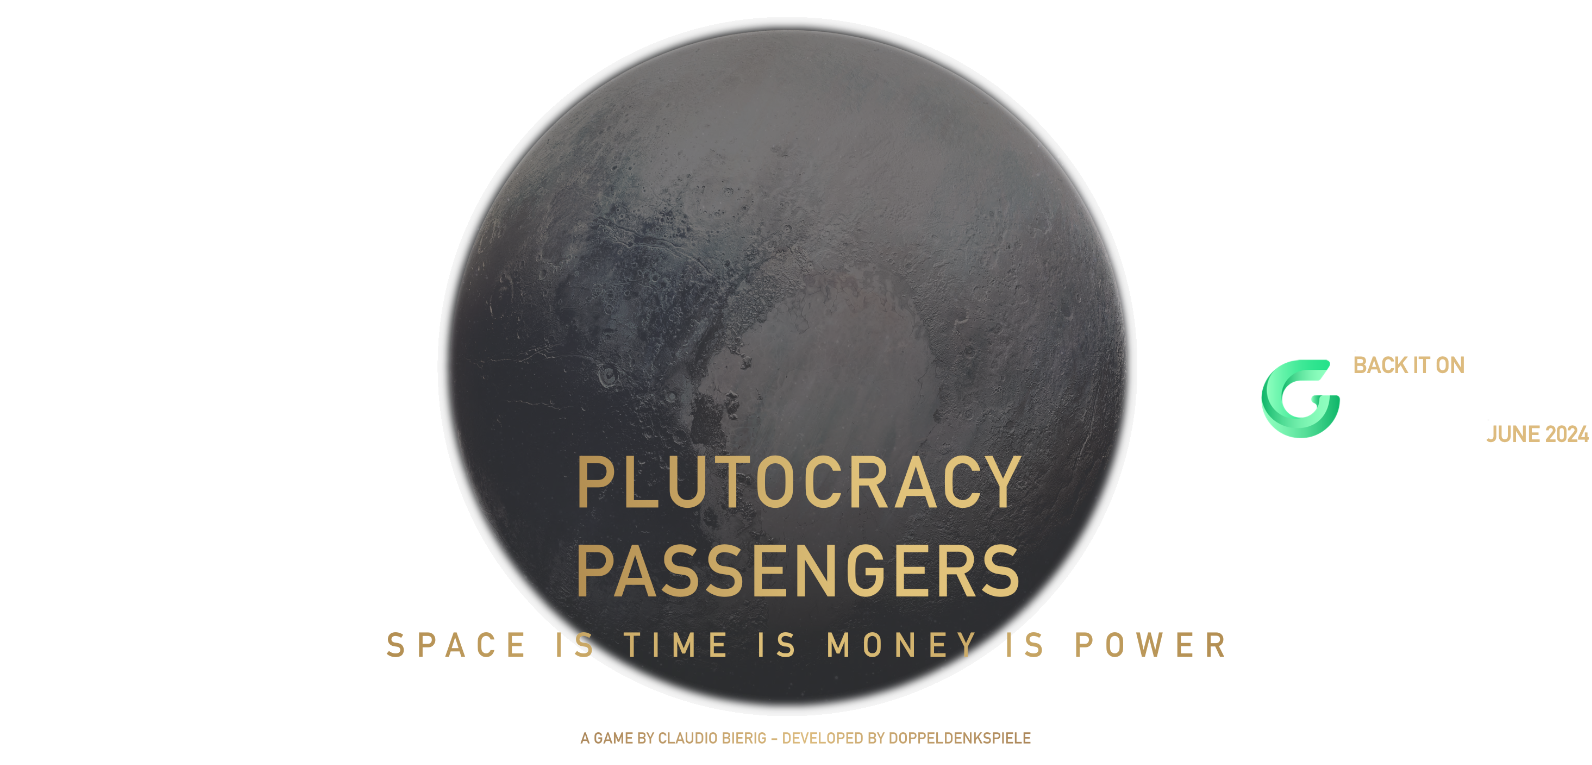 Back Plutocracy Passengers on Gamefound